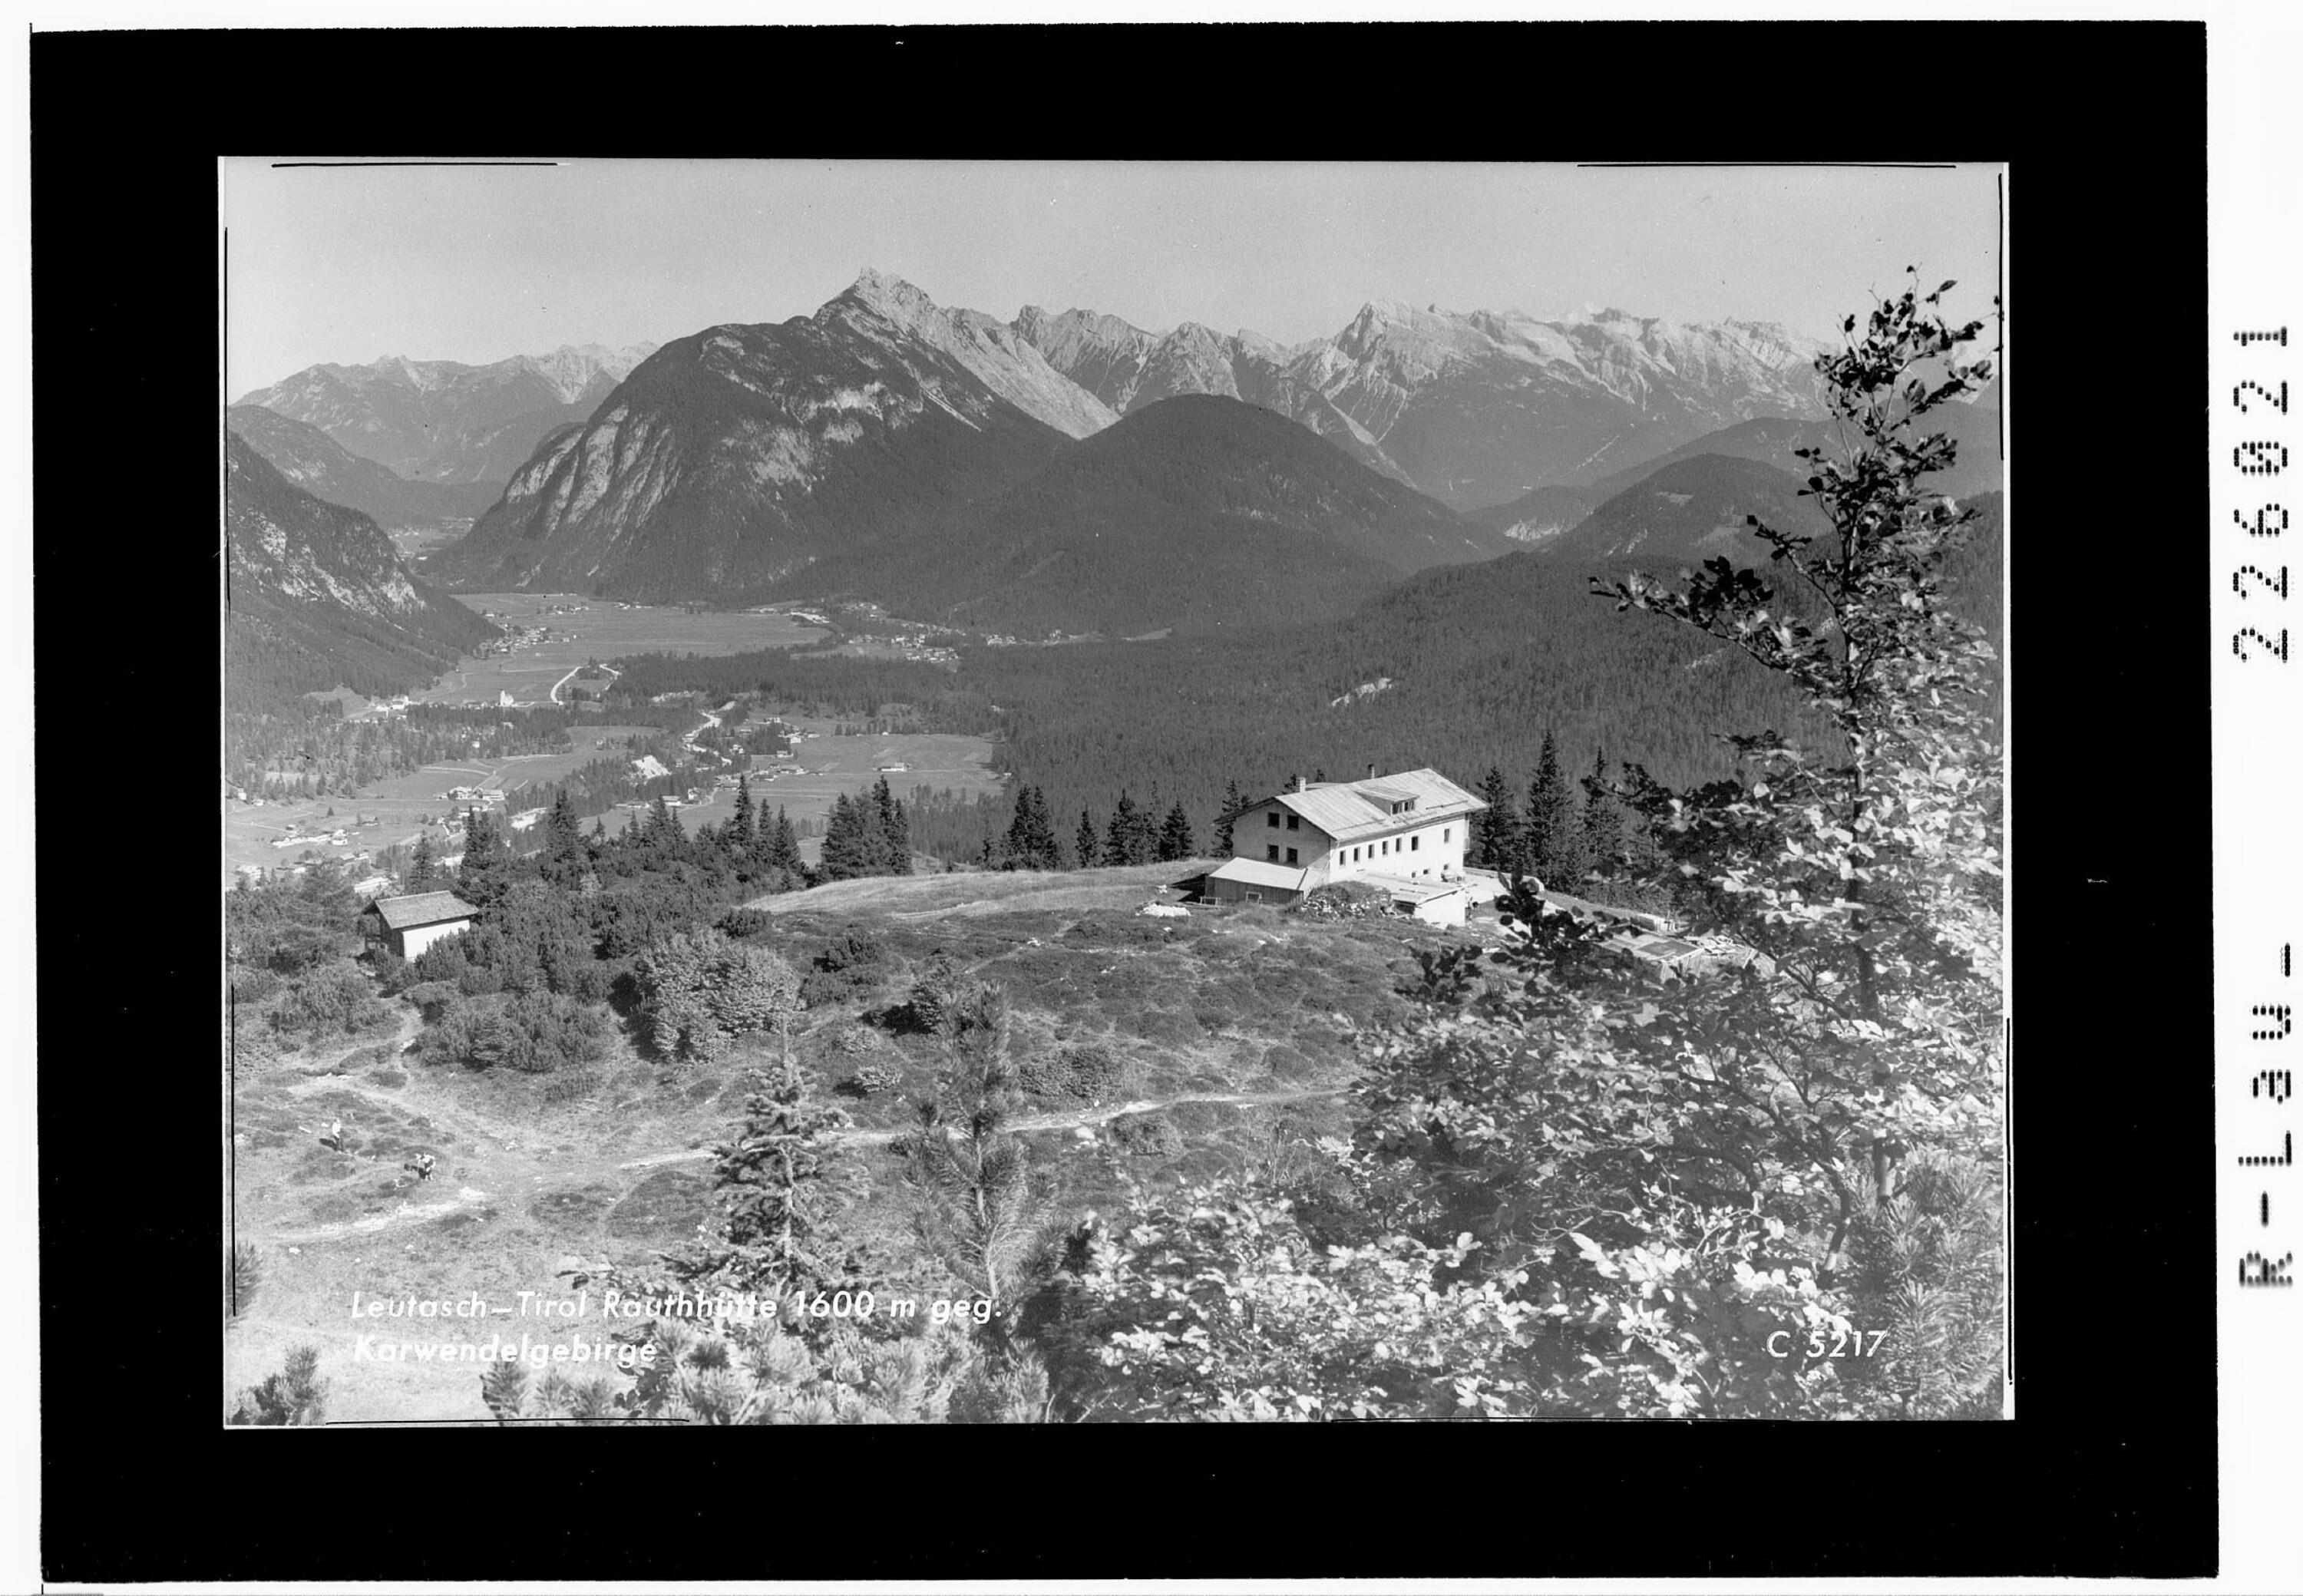 Leutasch - Tirol / Rauthhütte 1600 m gegen Karwendelgebirge></div>


    <hr>
    <div class=